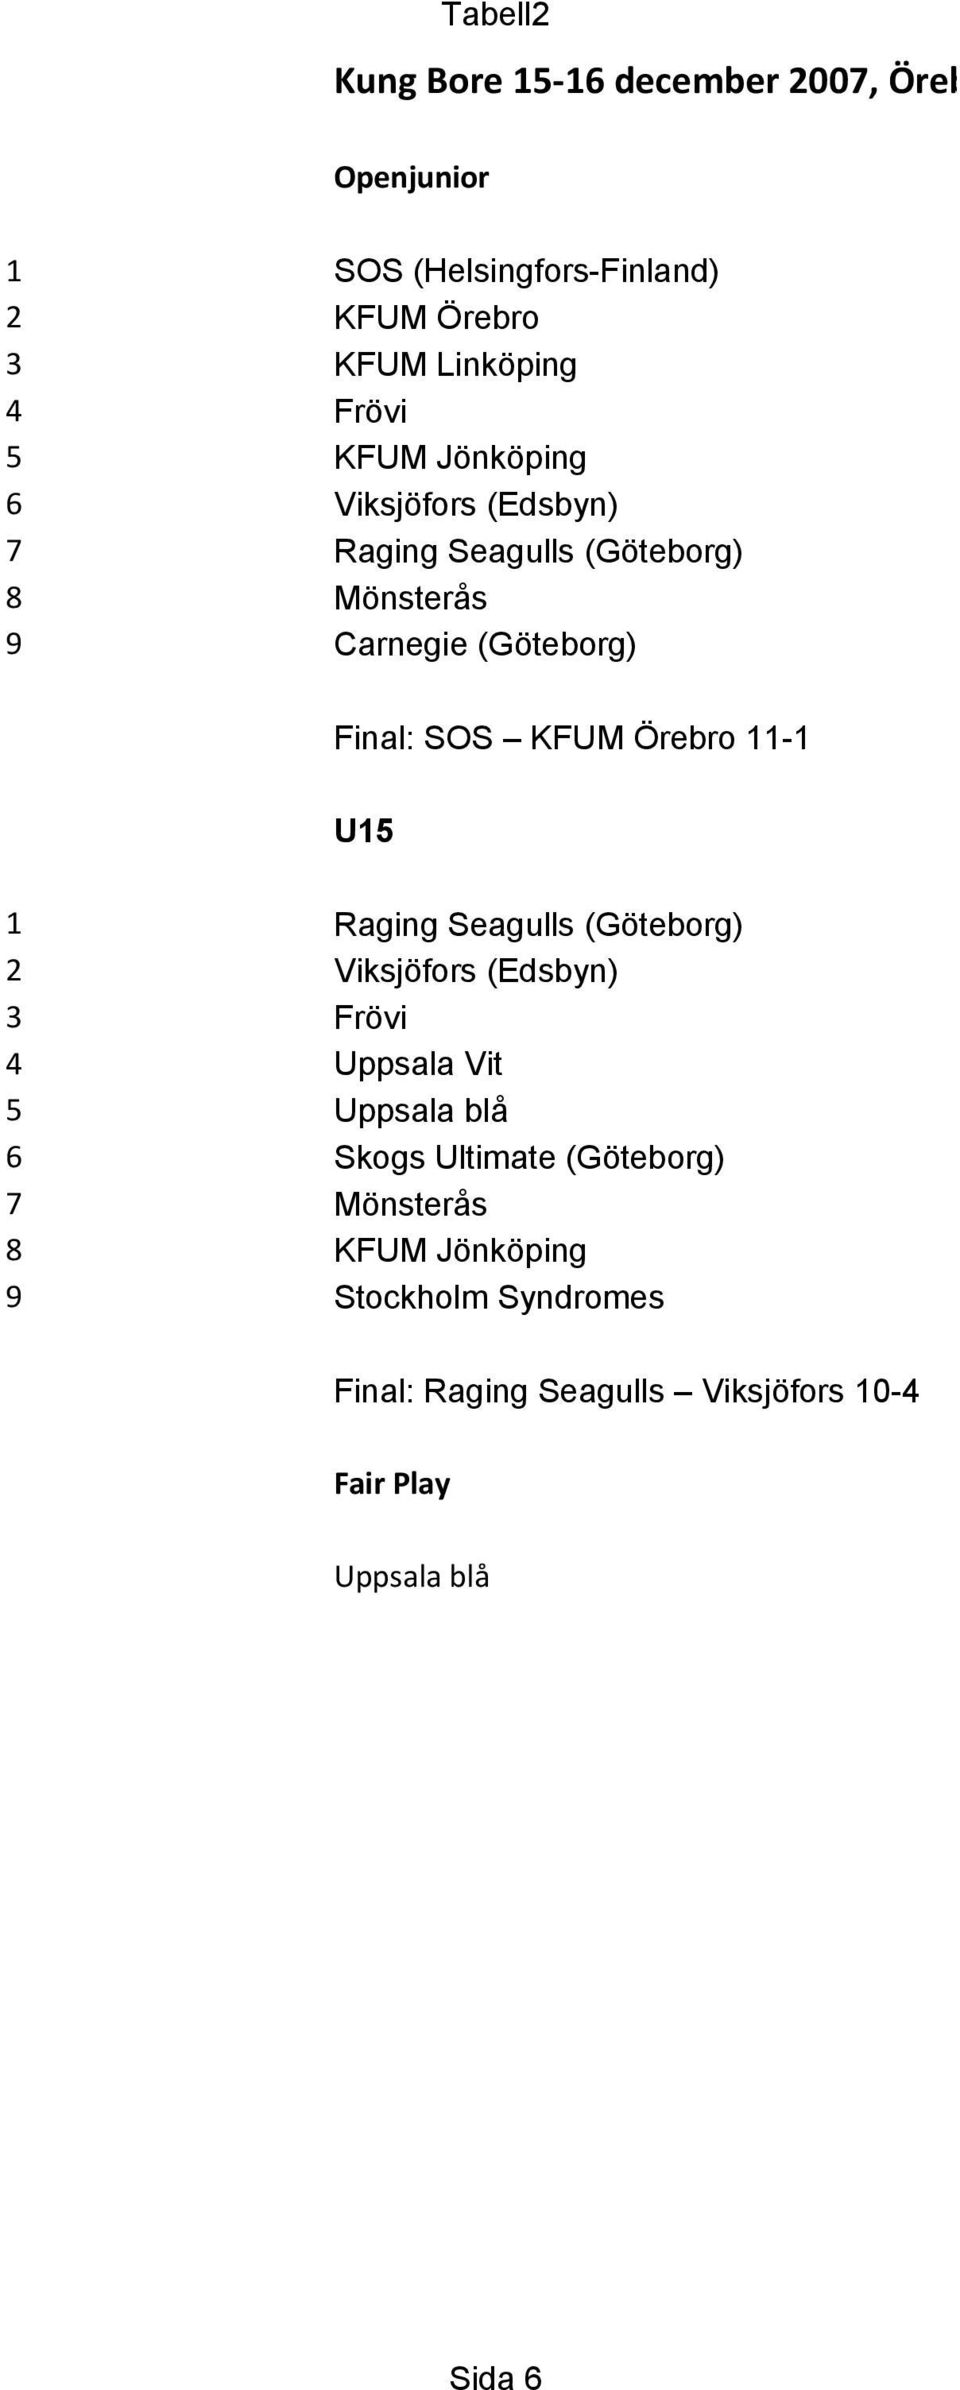 Örebro 11-1 U15 1 Raging Seagulls (Göteborg) 2 Viksjöfors (Edsbyn) 3 Frövi 4 Uppsala Vit 5 Uppsala blå 6 Skogs Ultimate